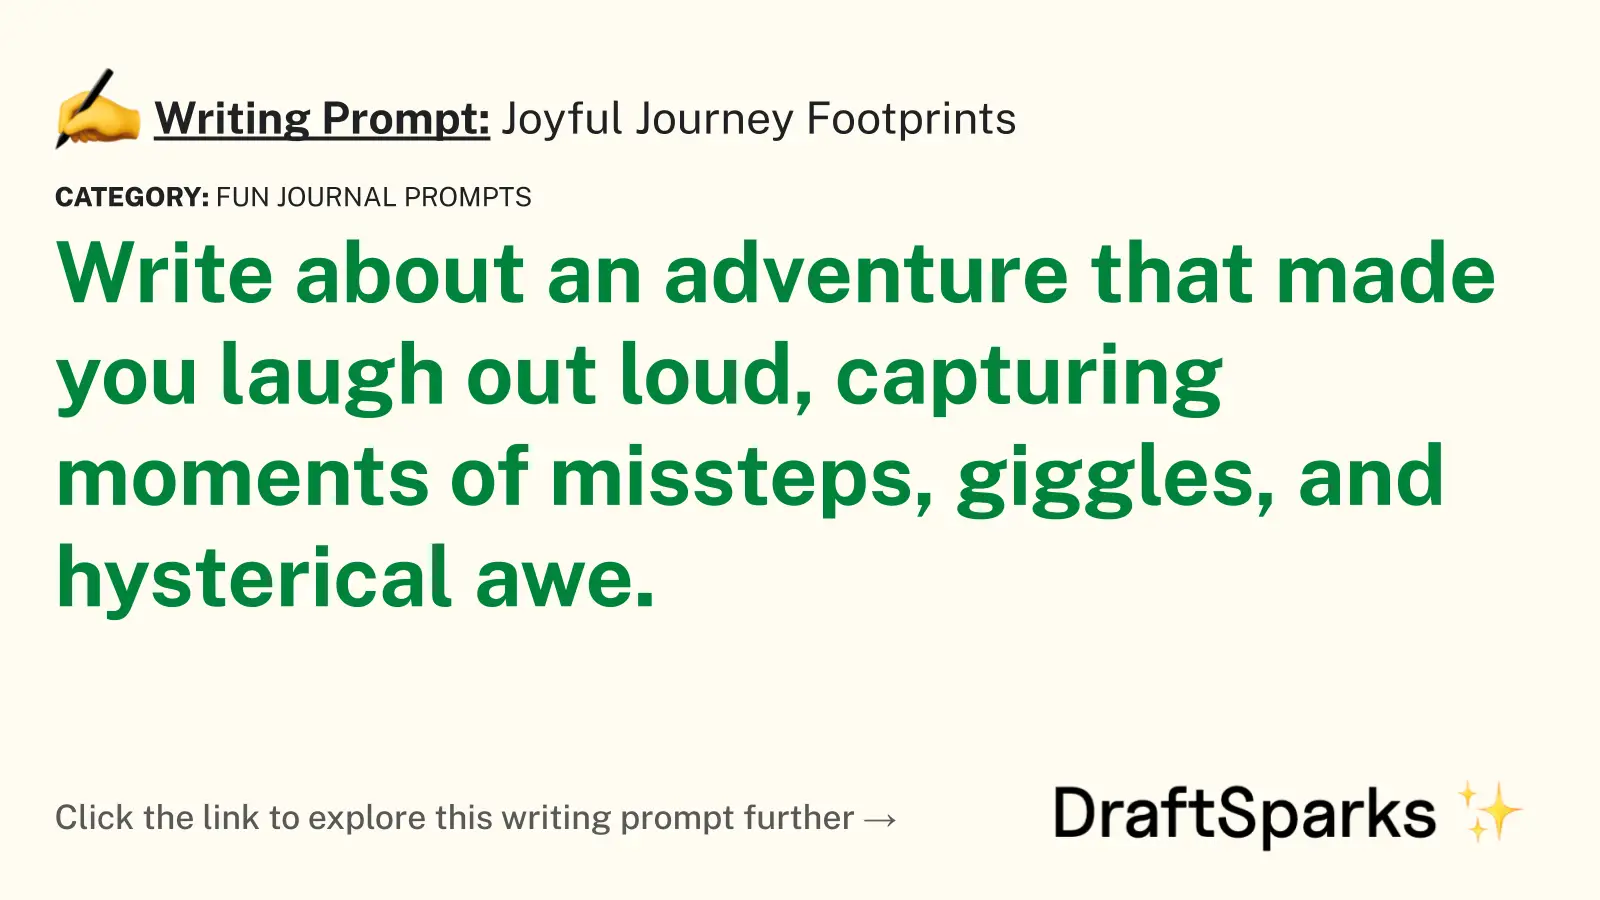 Joyful Journey Footprints